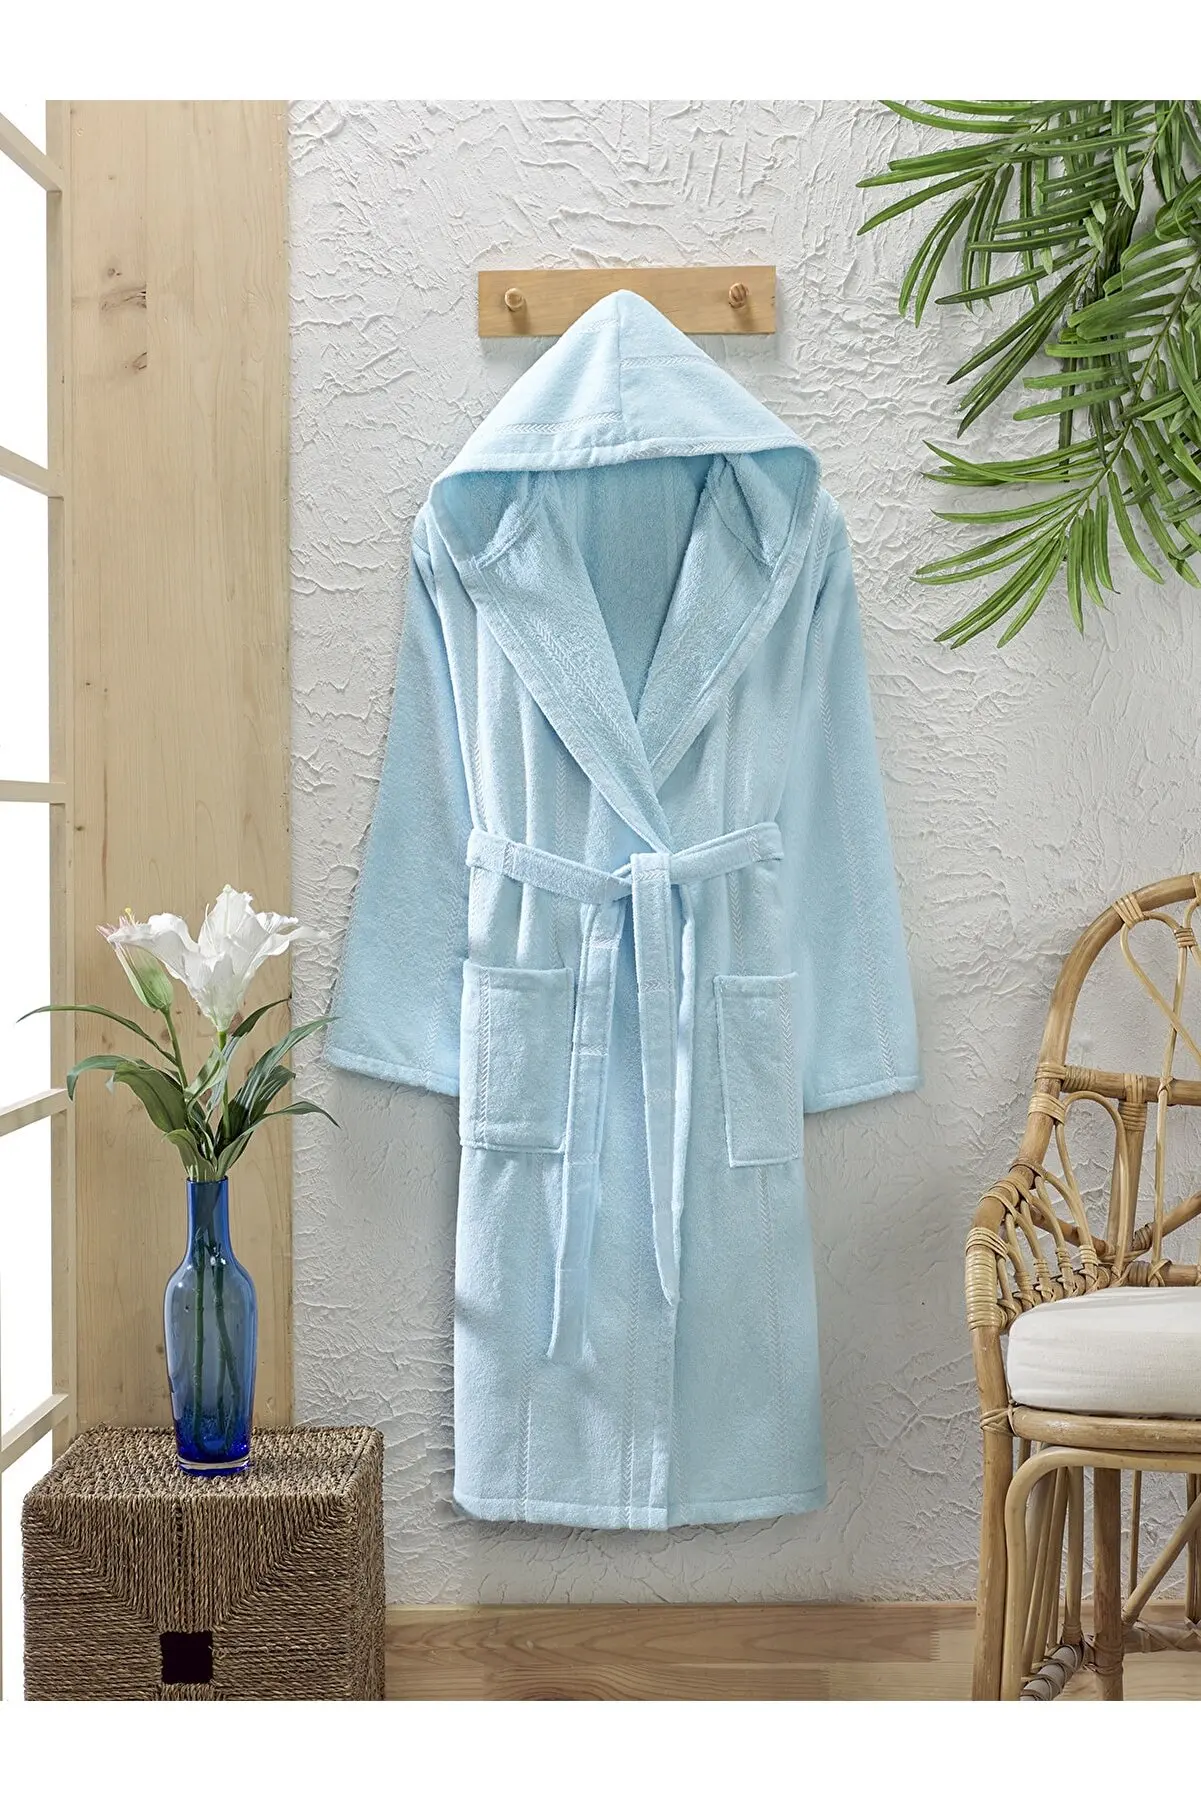 Luxury Cotton Sky Blue Bathrobe For Men For Women With Hooded And Belt Towel Velvet Nightrobe Sleepwear Bath Robe Made In Turkey